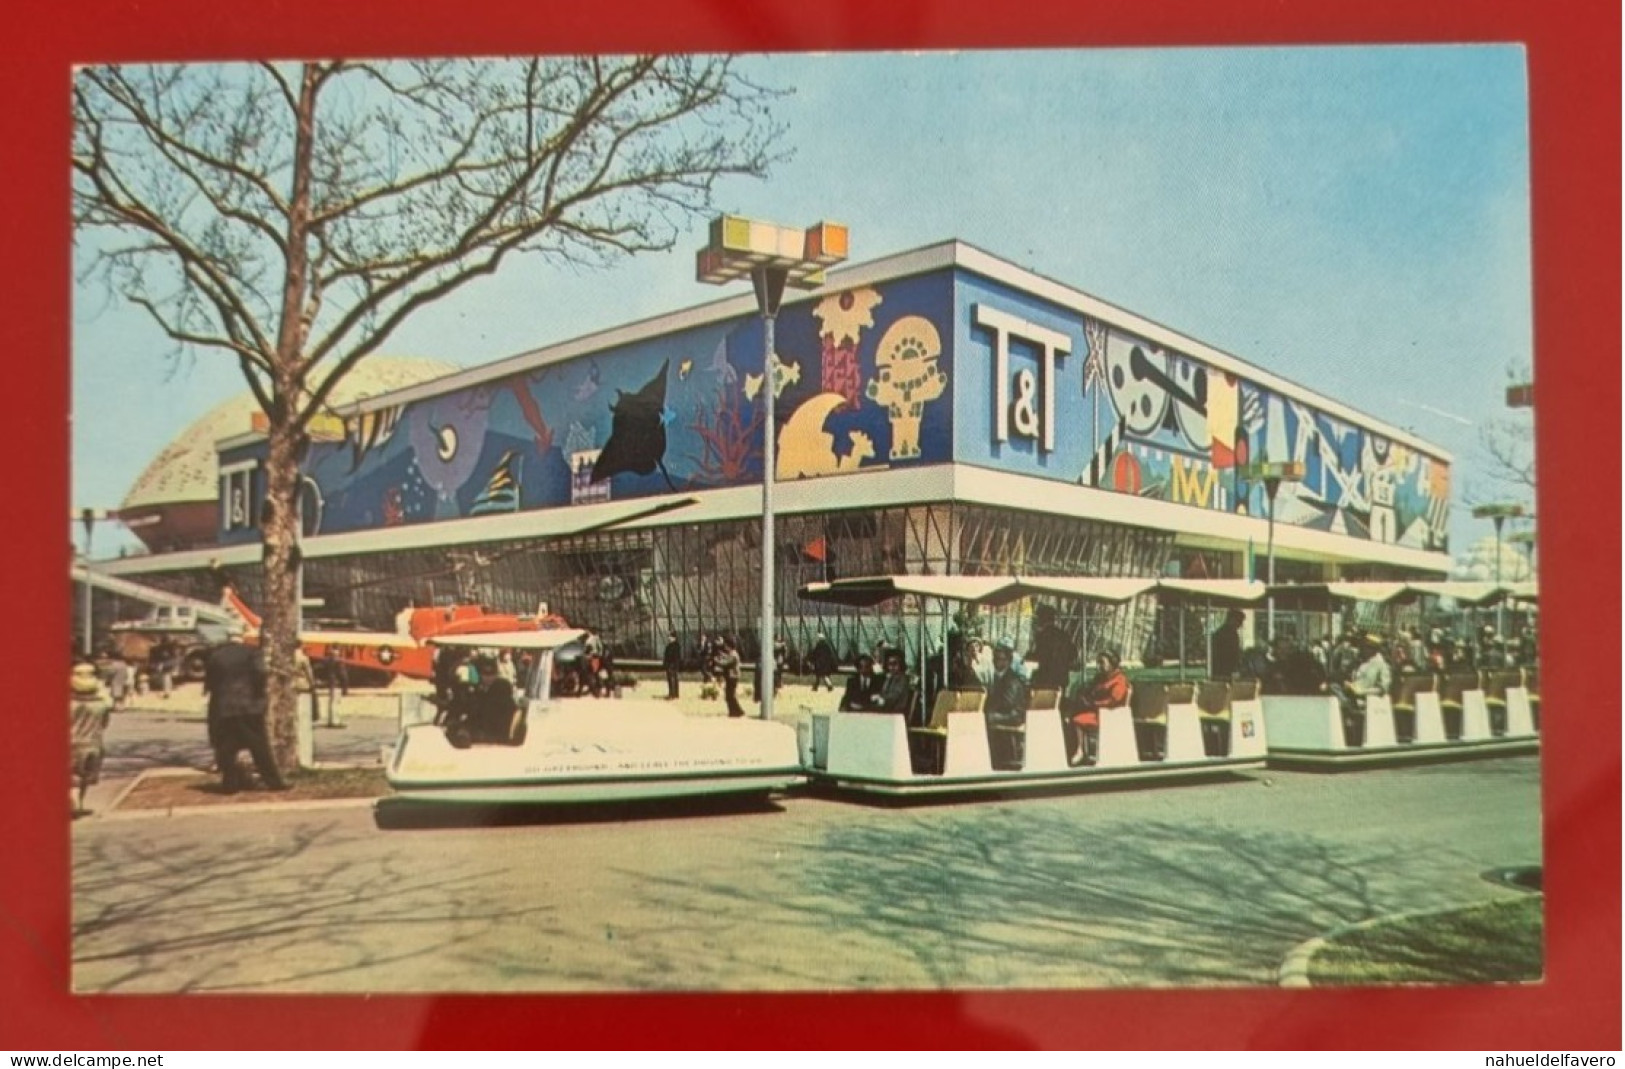 Uncirculated Postcard - USA - NY, NEW YORK WORLD'S FAIR 1964-65 - TRANSPORTATION AND TRAVEL PAVILION - Tentoonstellingen